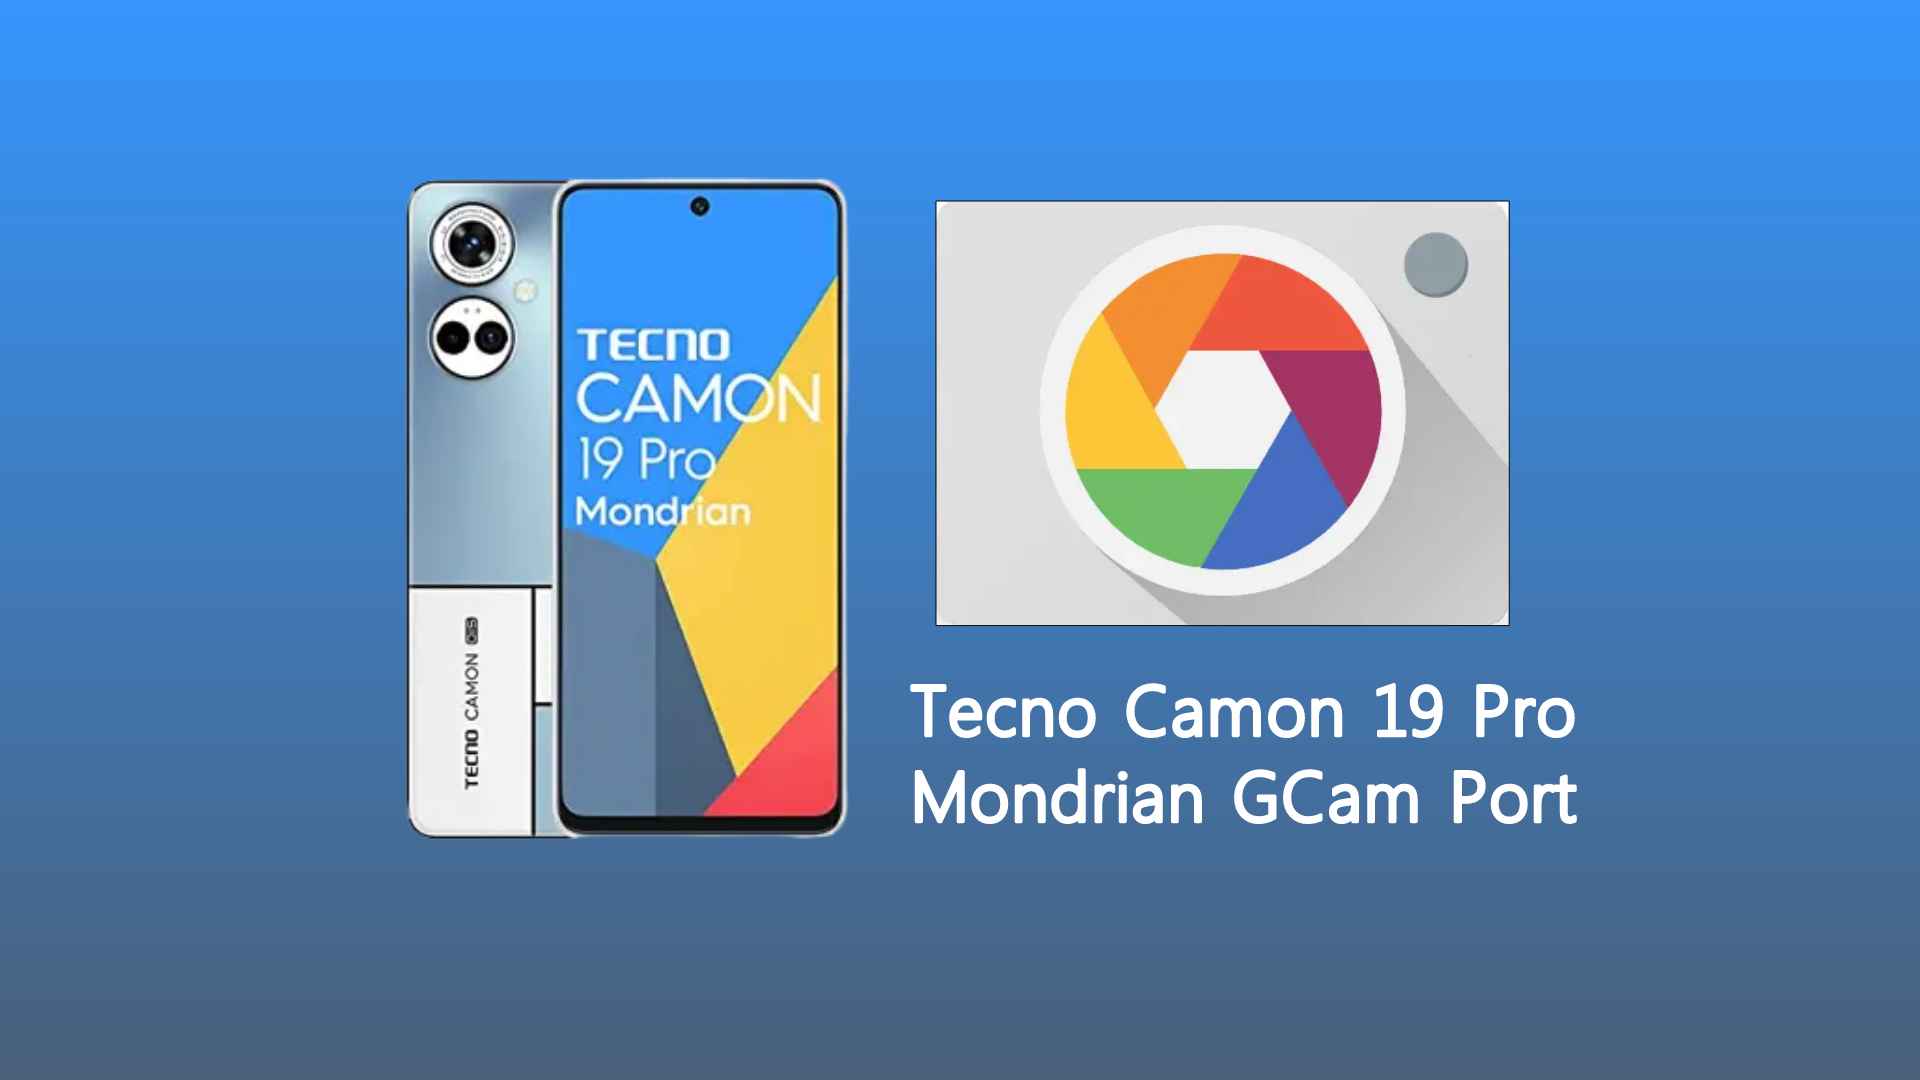 Tecno Camon 19 Pro Mondrian GCam Port